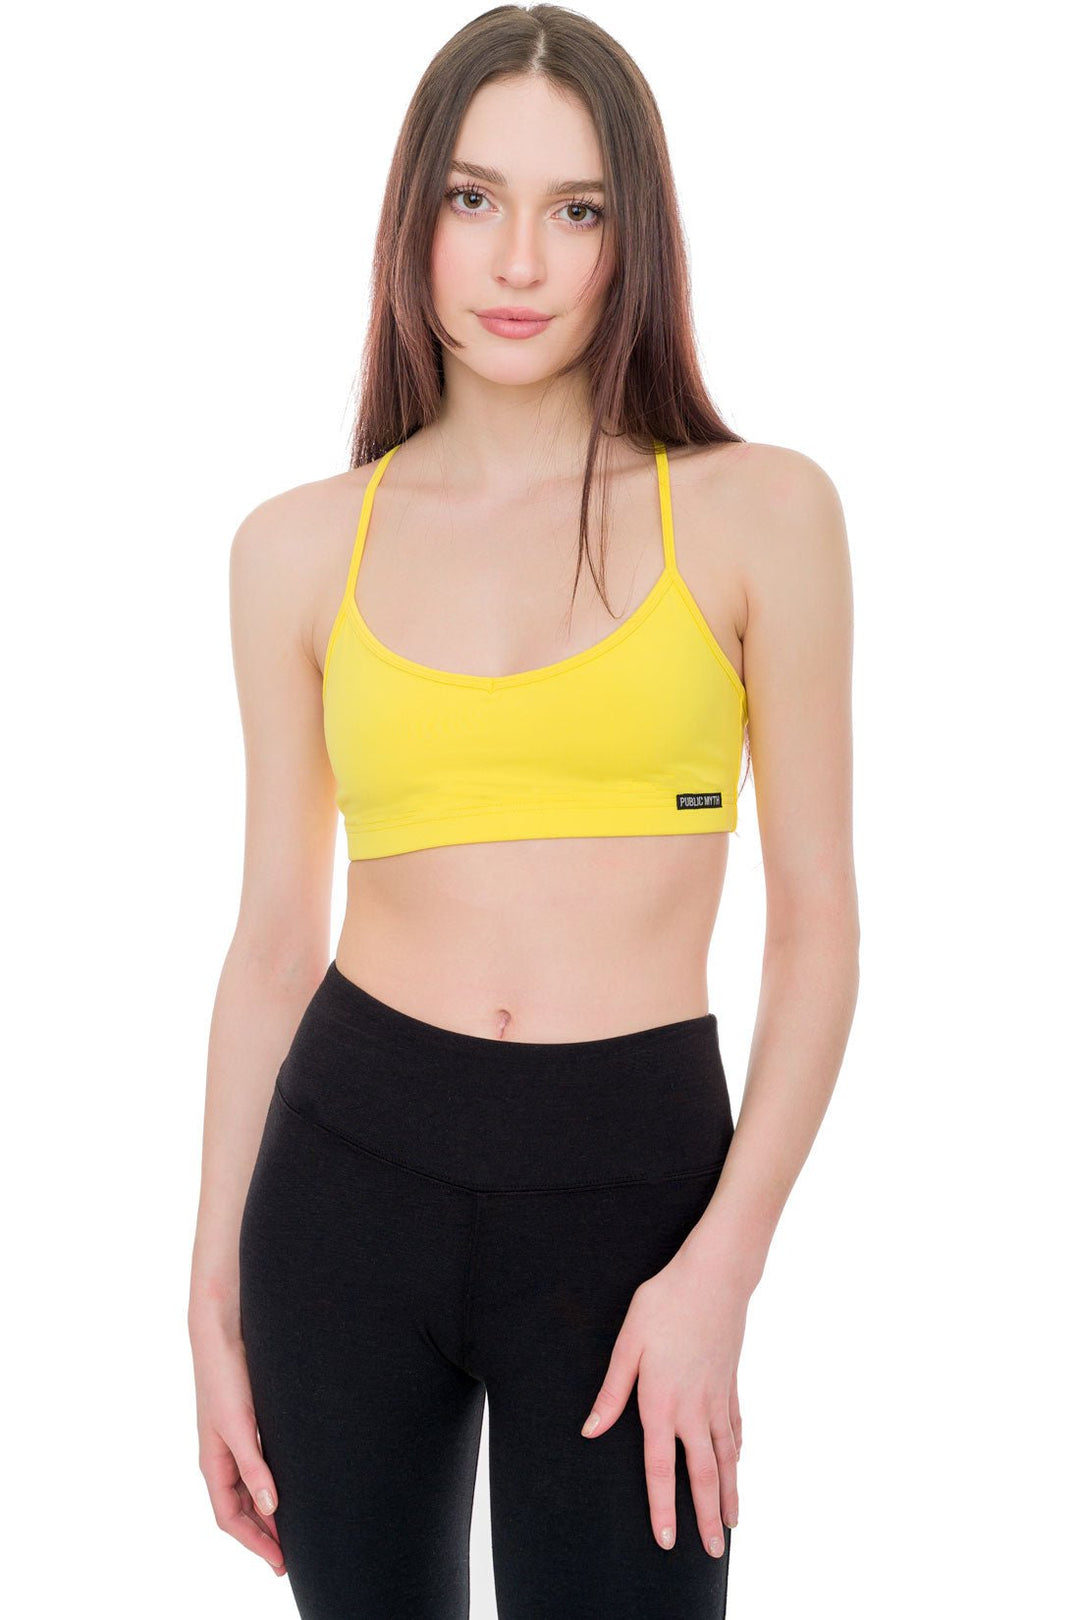 Yellow sports bra with thin straps